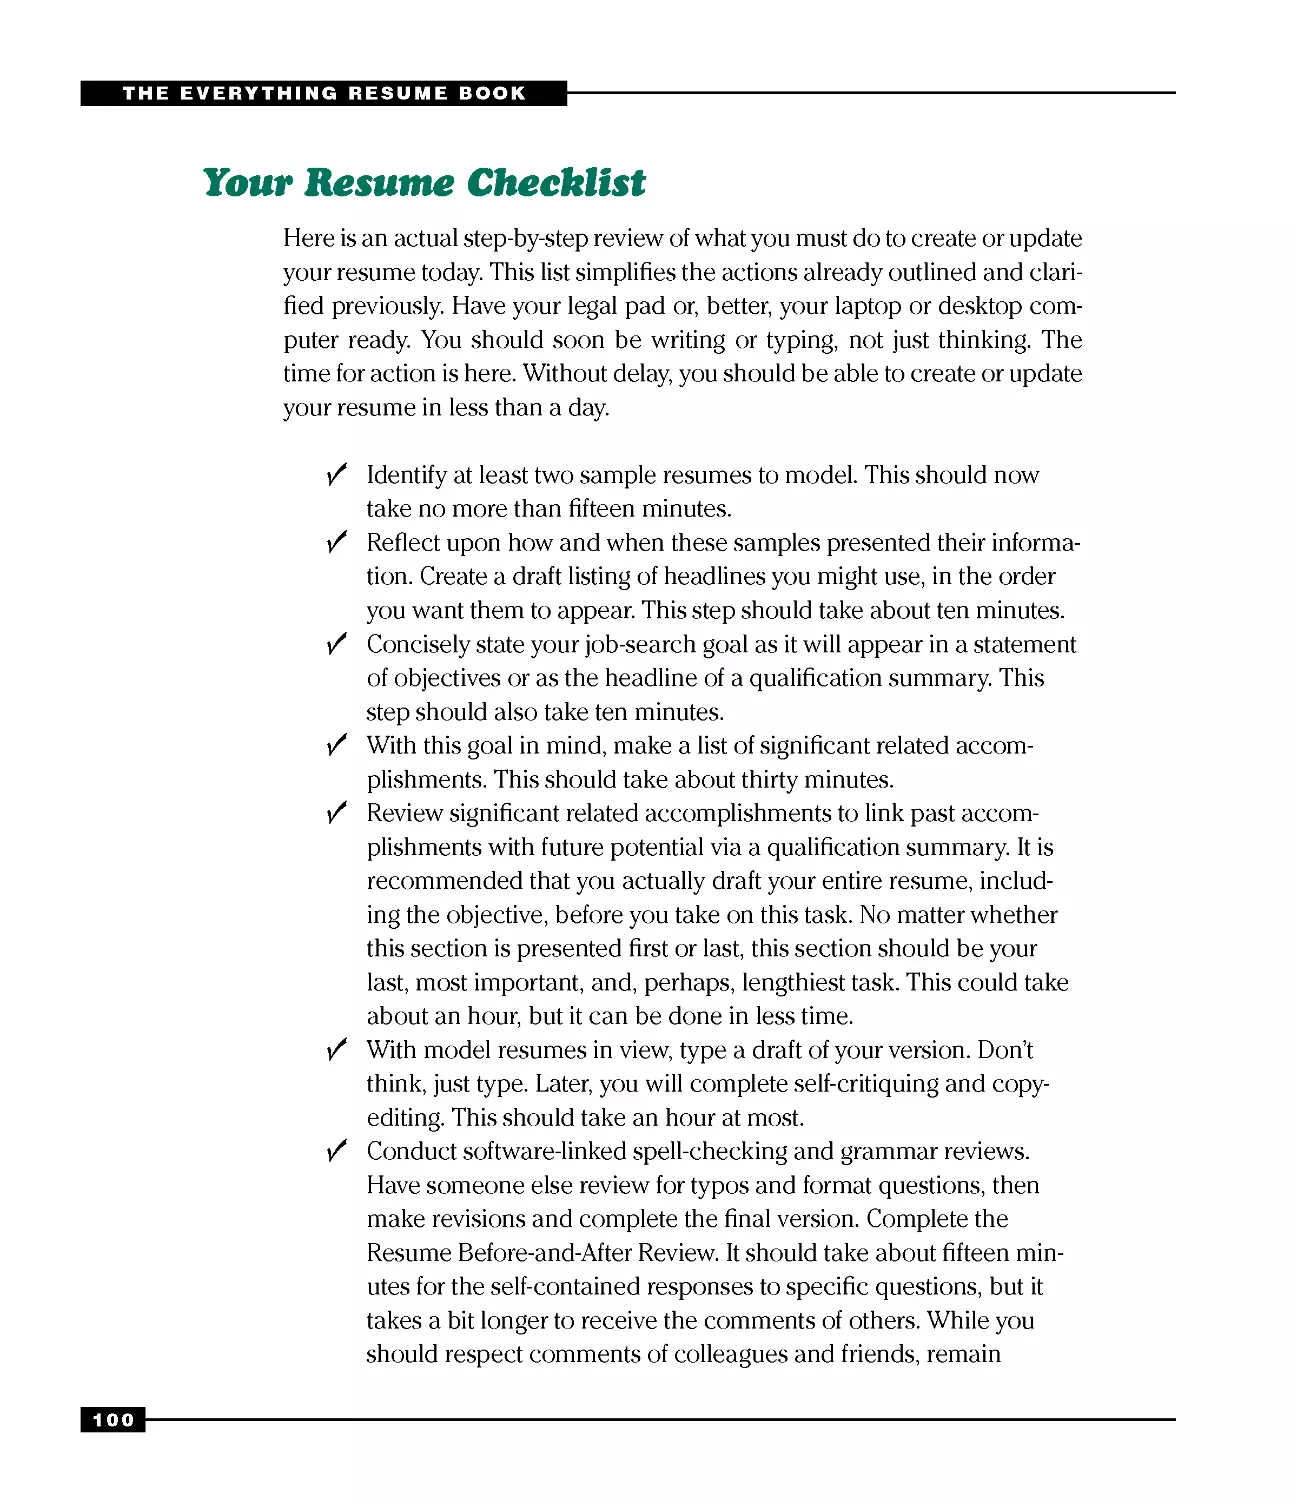 Your Resume Checklist